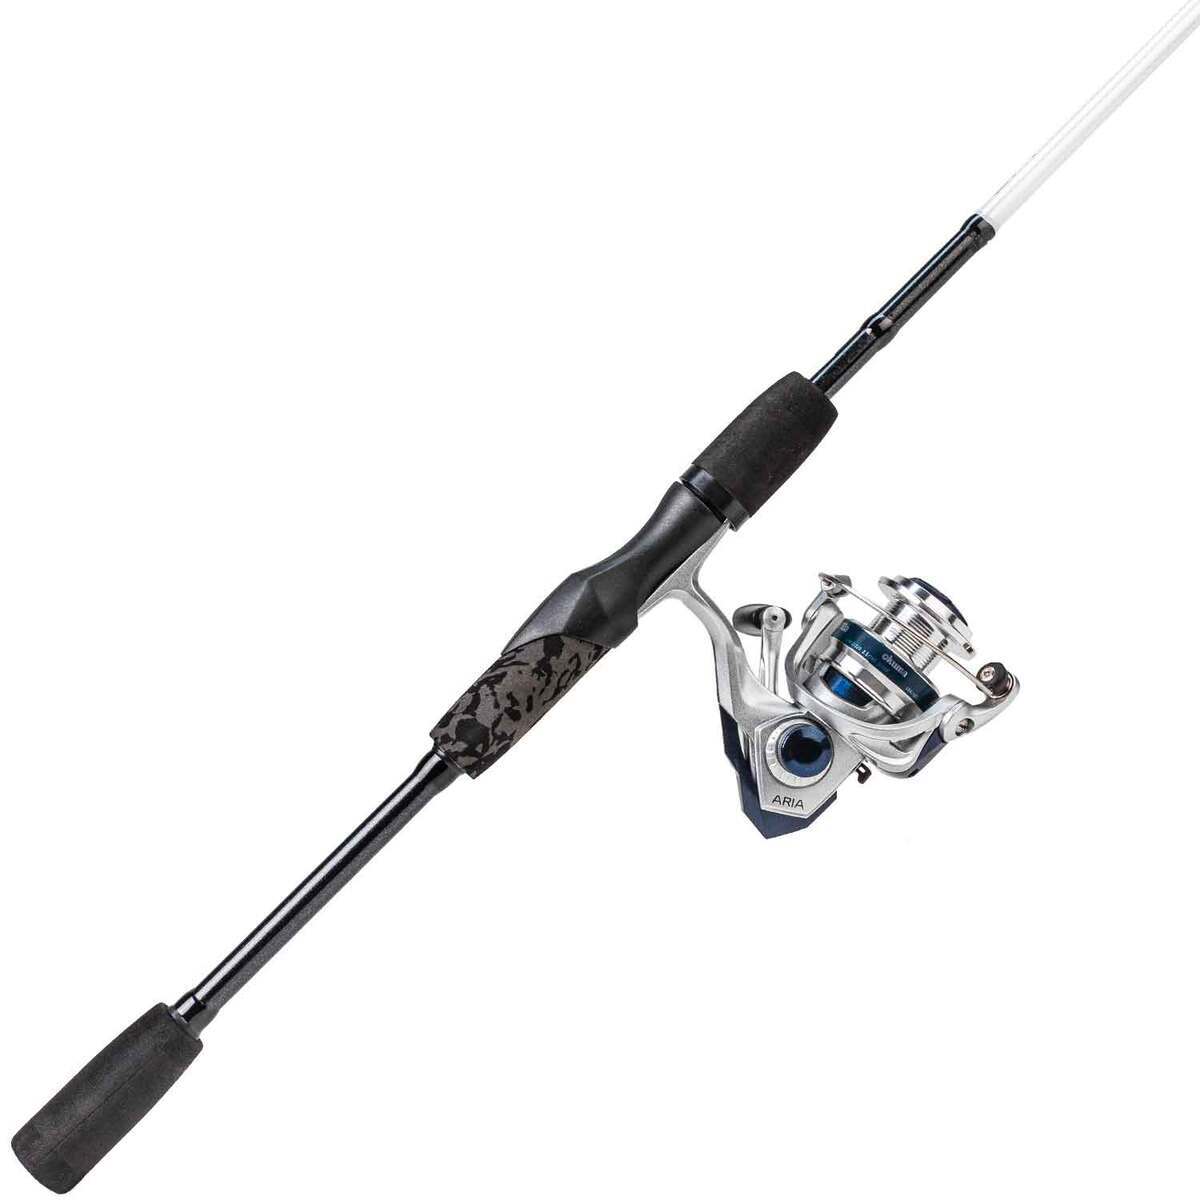  Fishing Rod & Reel Combos - Dr.Fish / Fishing Rod & Reel Combos  / Fishing Equipm: Sports & Outdoors